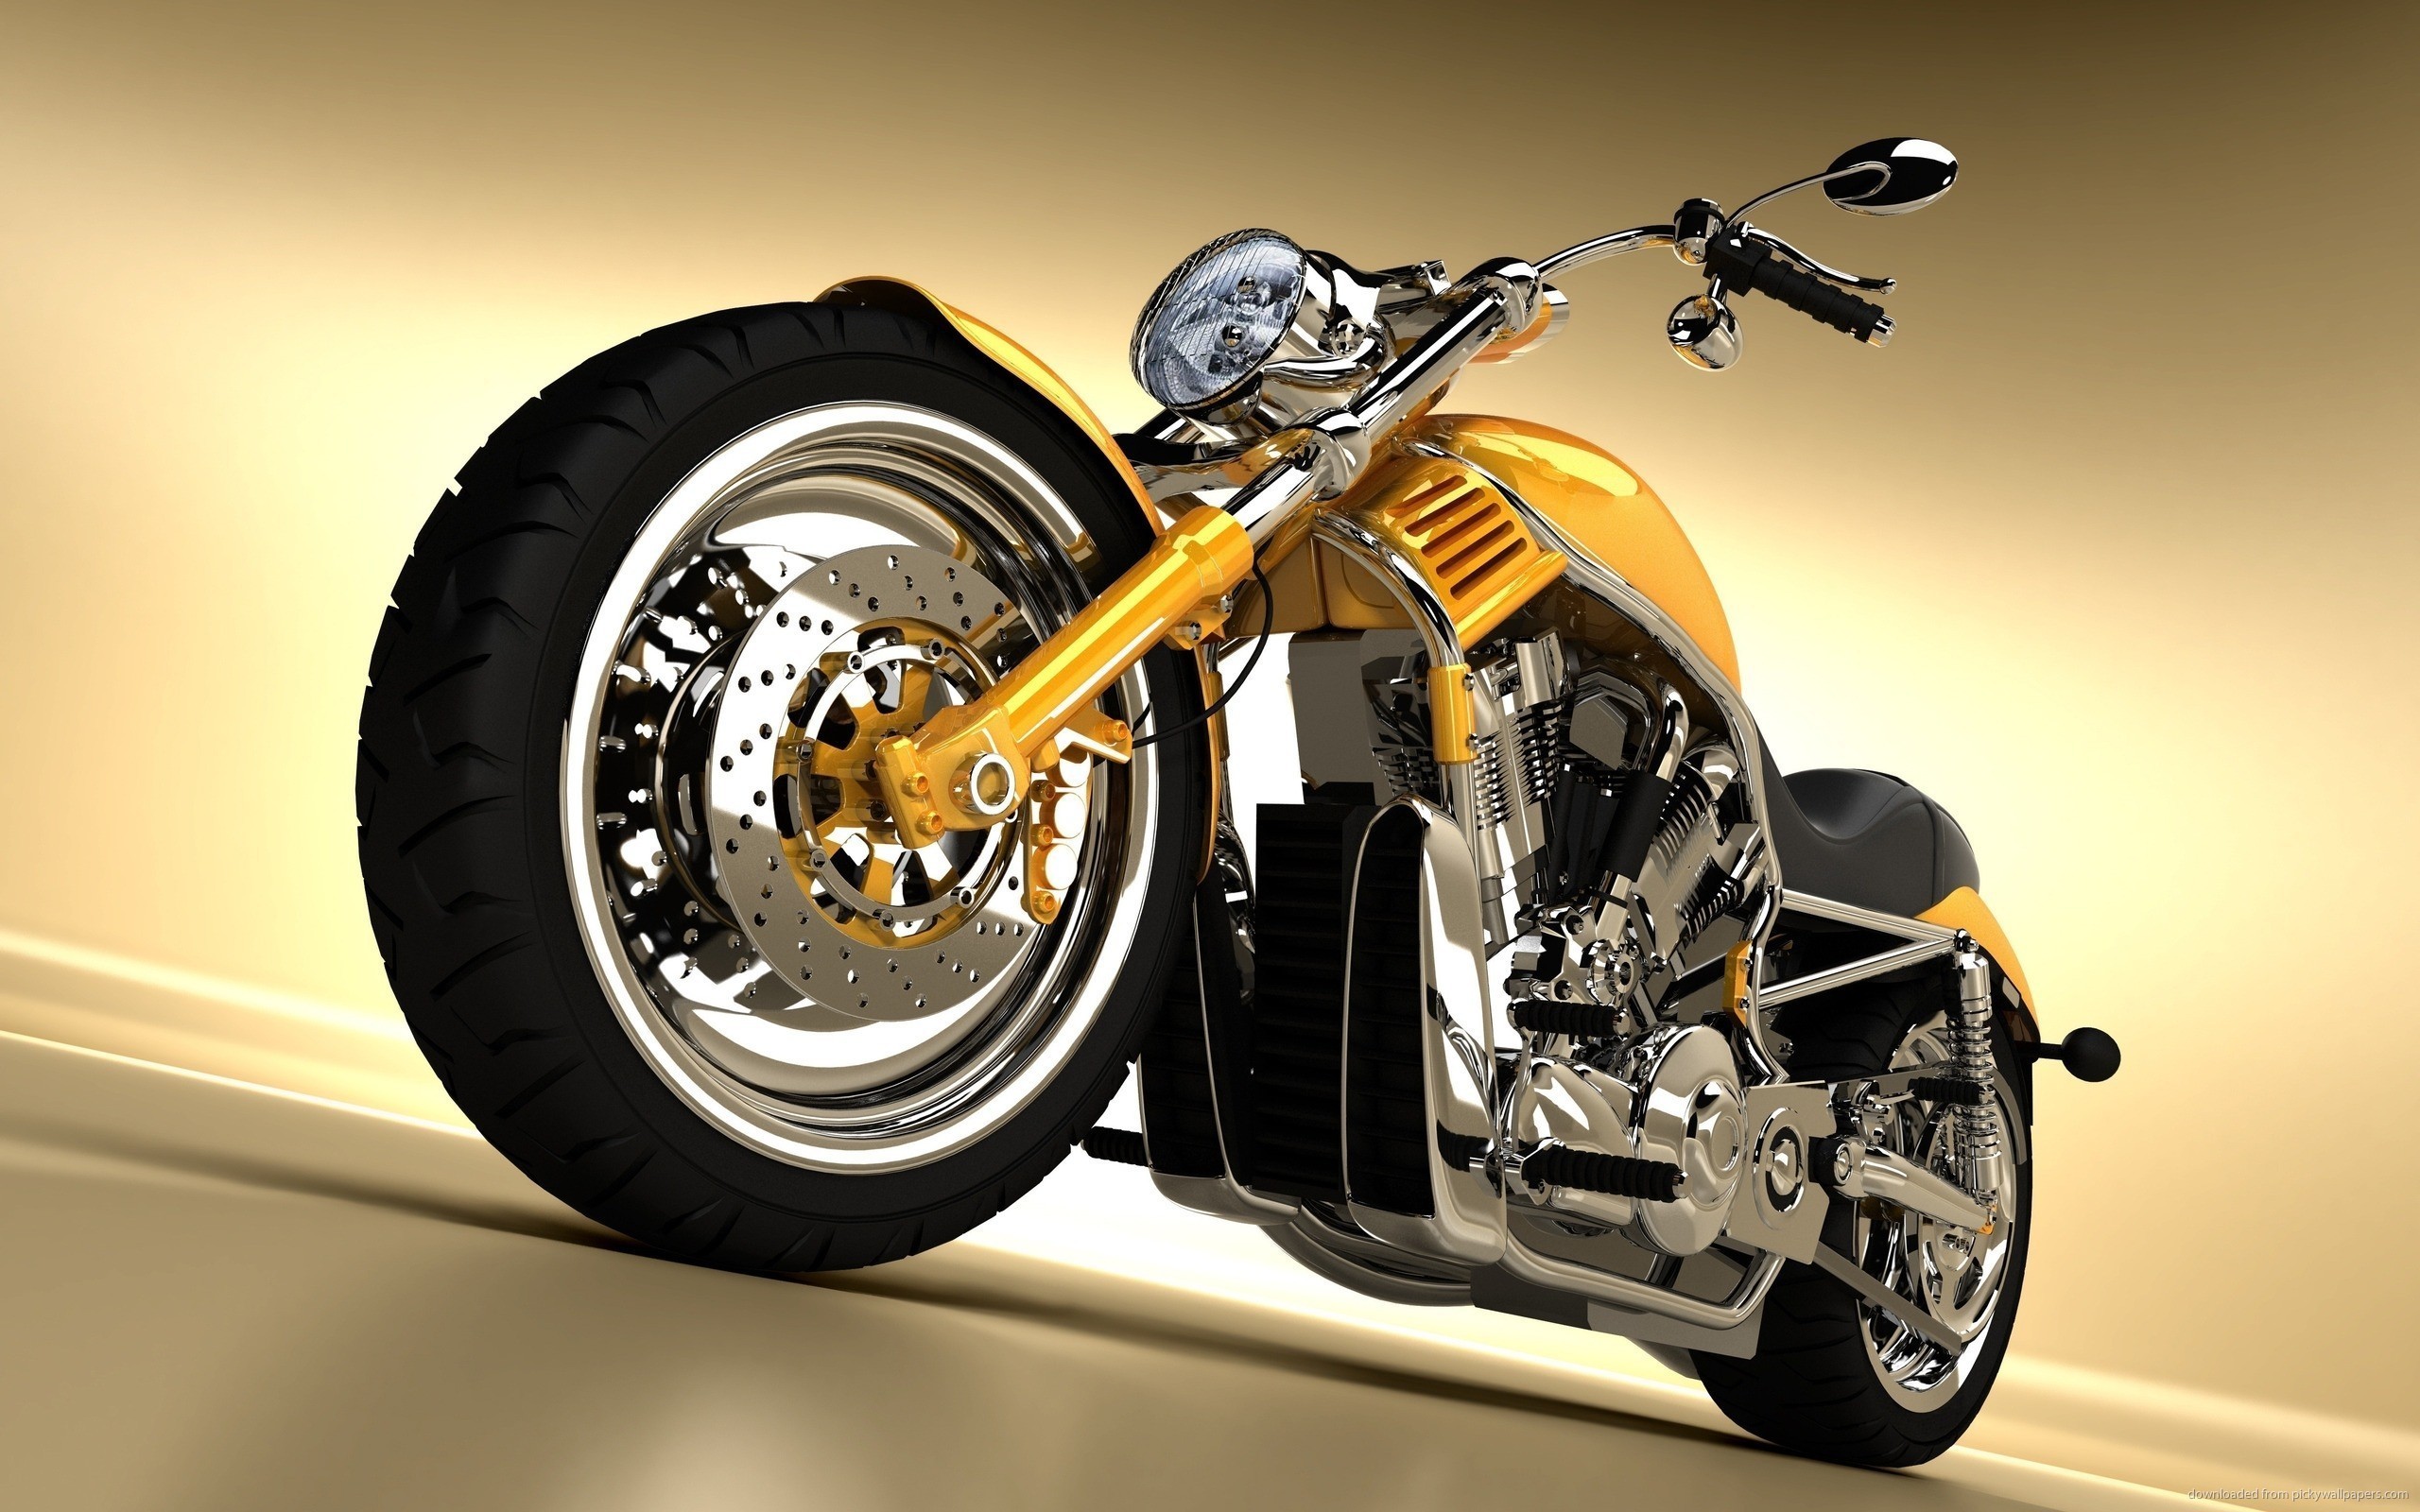 2560x1600 Harley Davidson Chopper Wallpaper Free for Desktop Background .